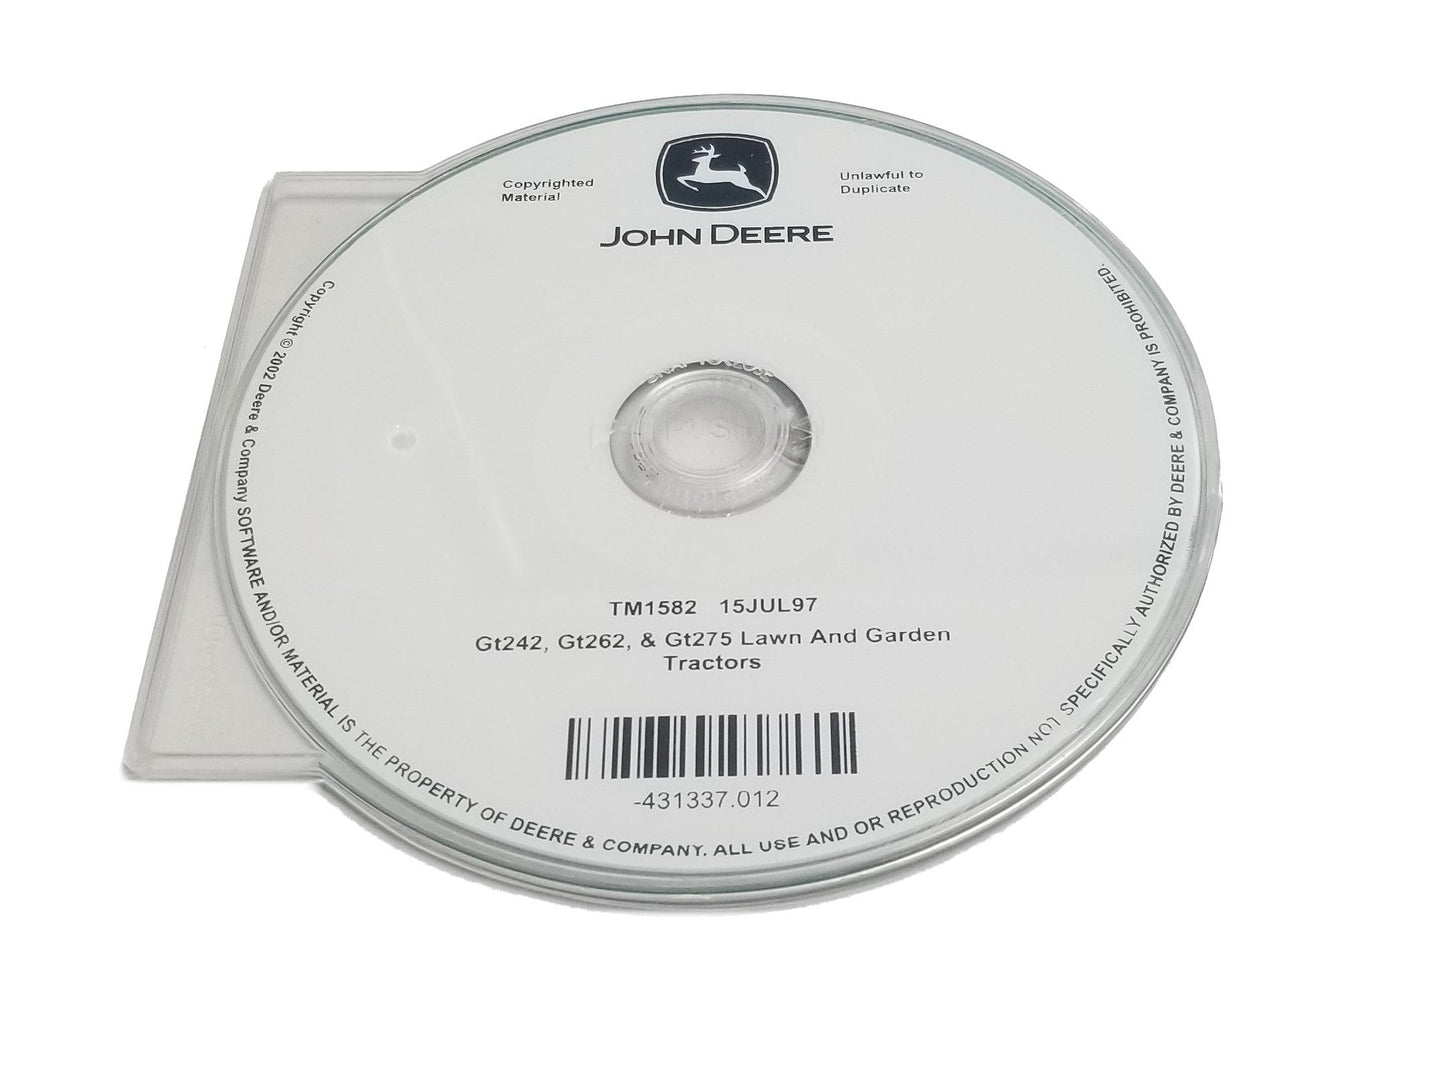 John Deere GT242/GT262/GT275 Lawn & Garden Tractors Technical CD Manual - TM1582CD